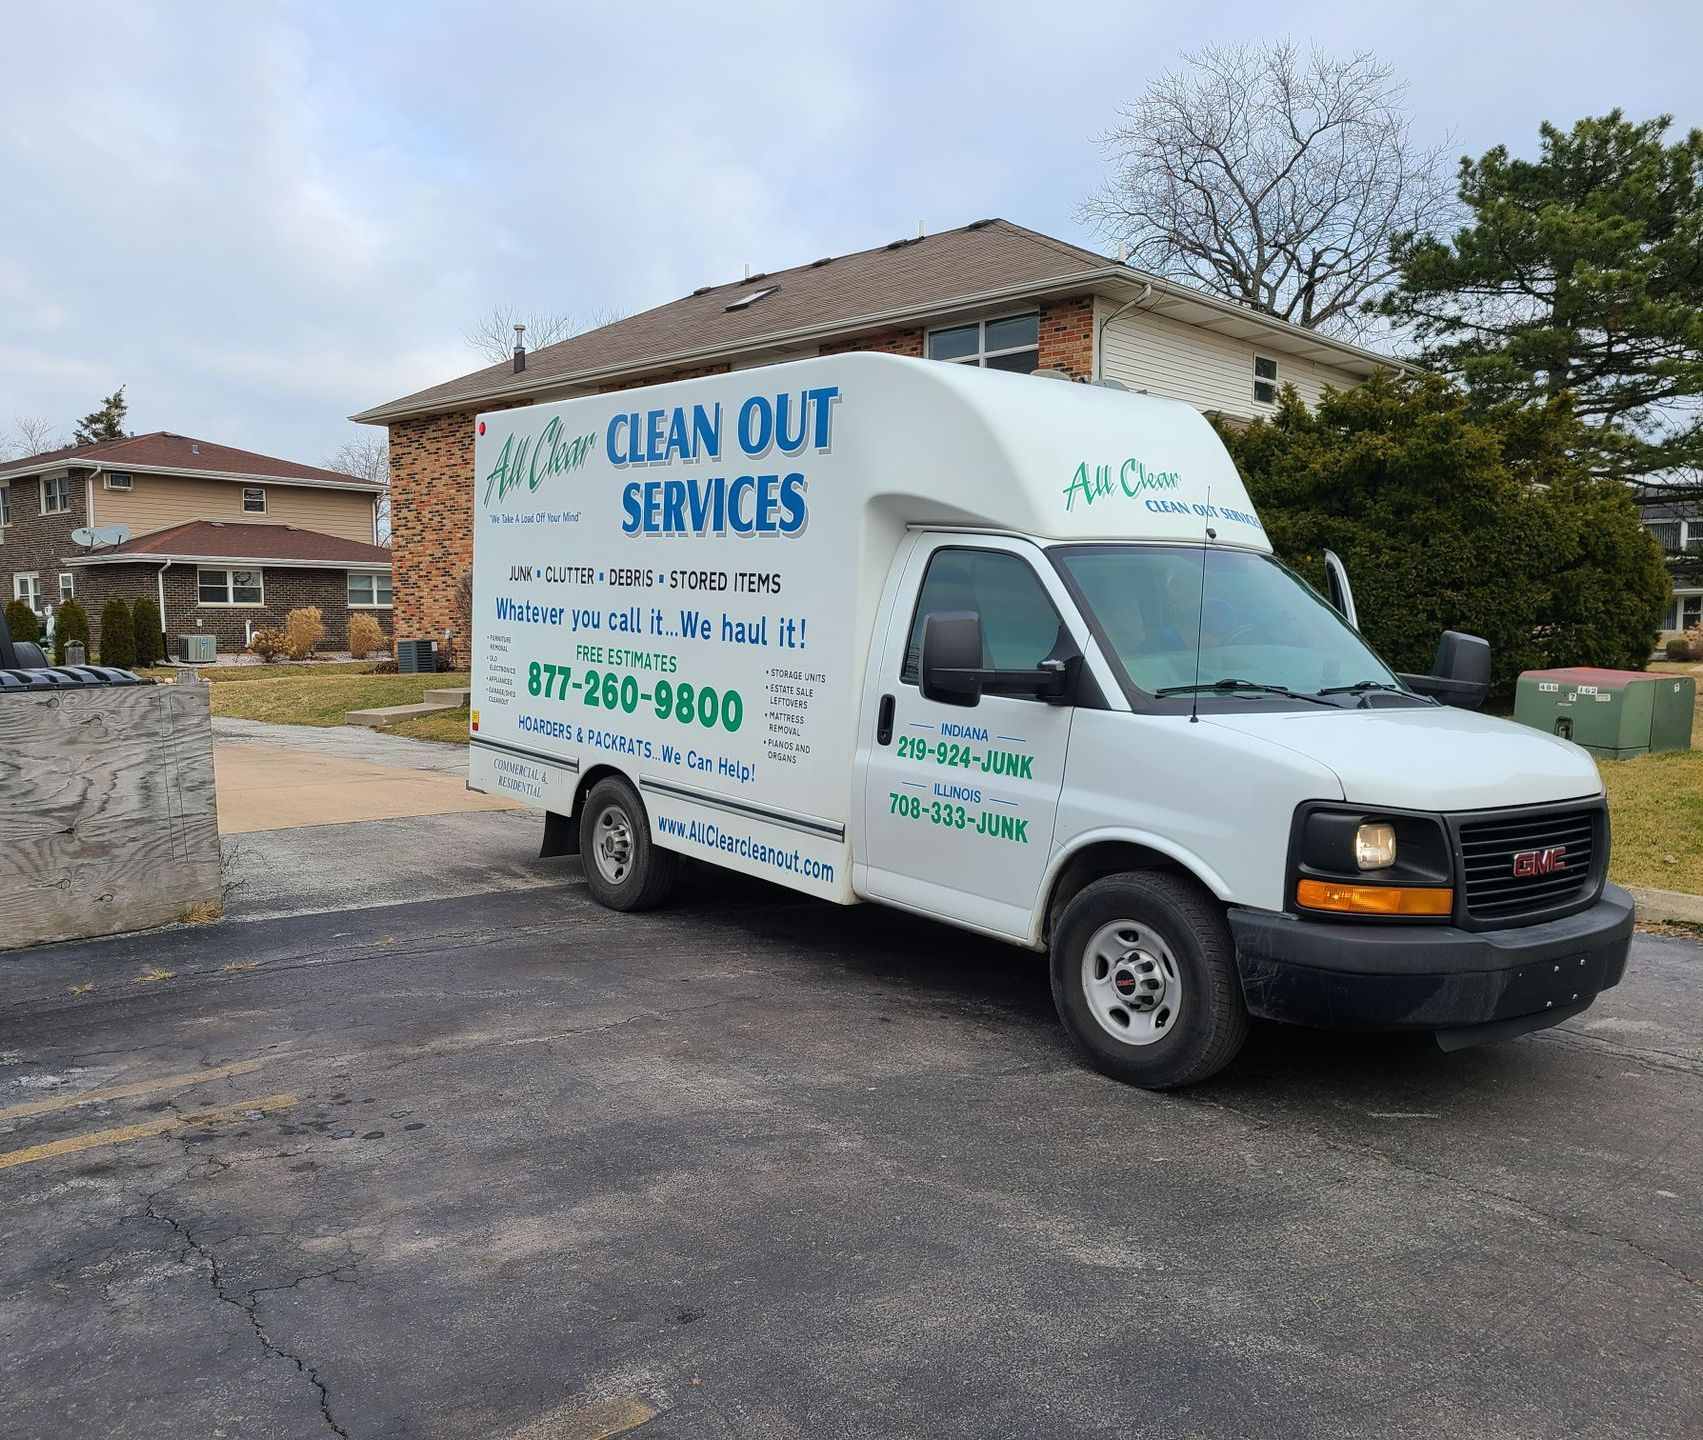 Junk removal & cleanout services in Palos Park, IL